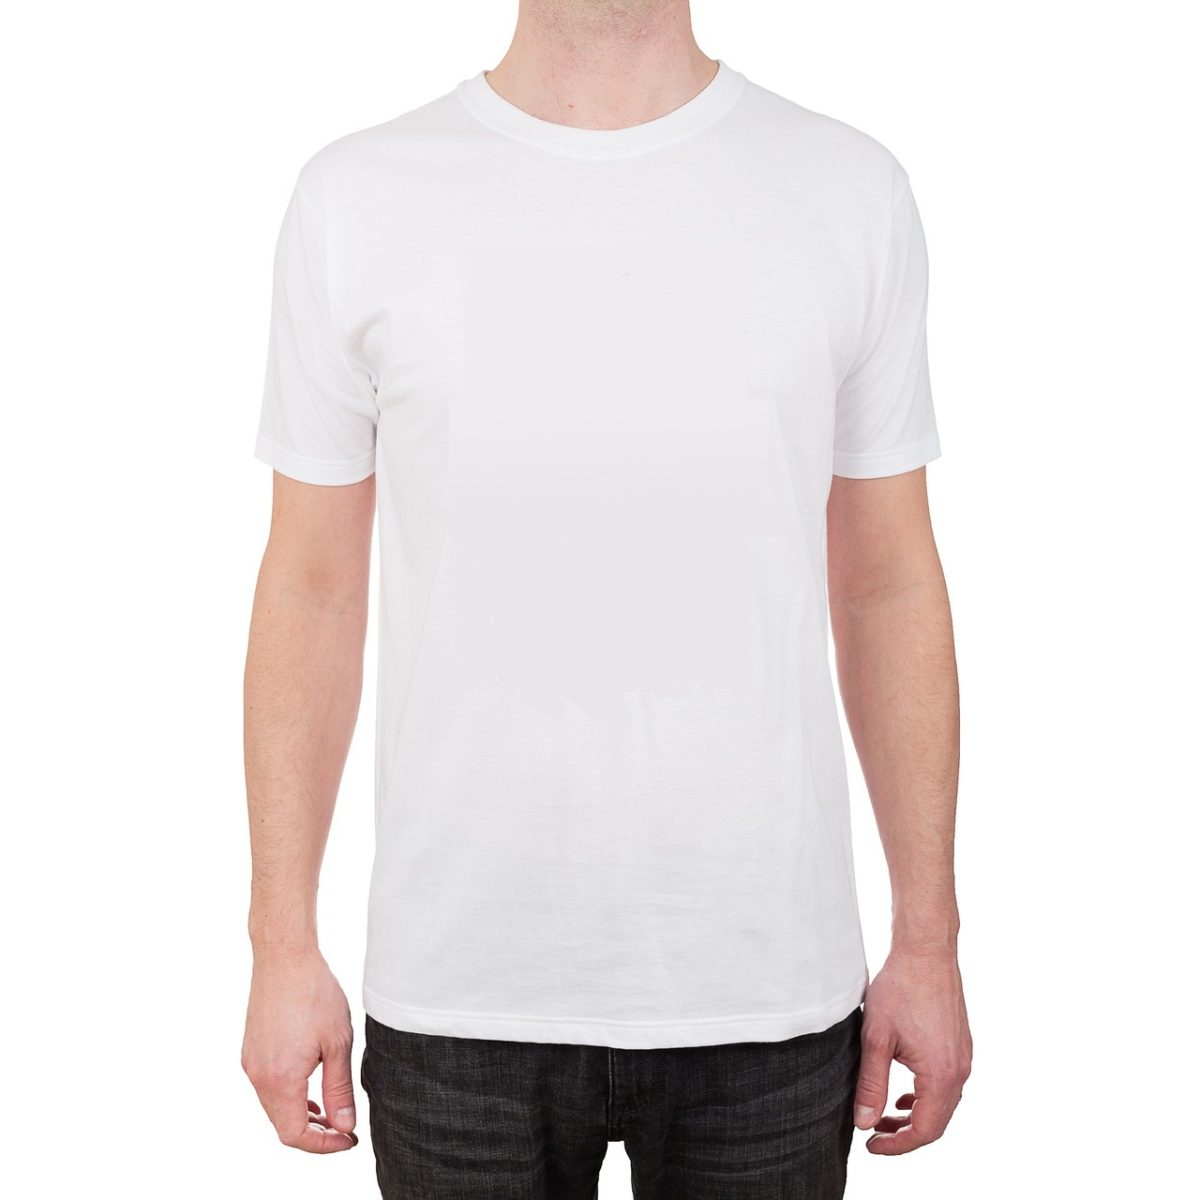 t-shirt, white, clothes